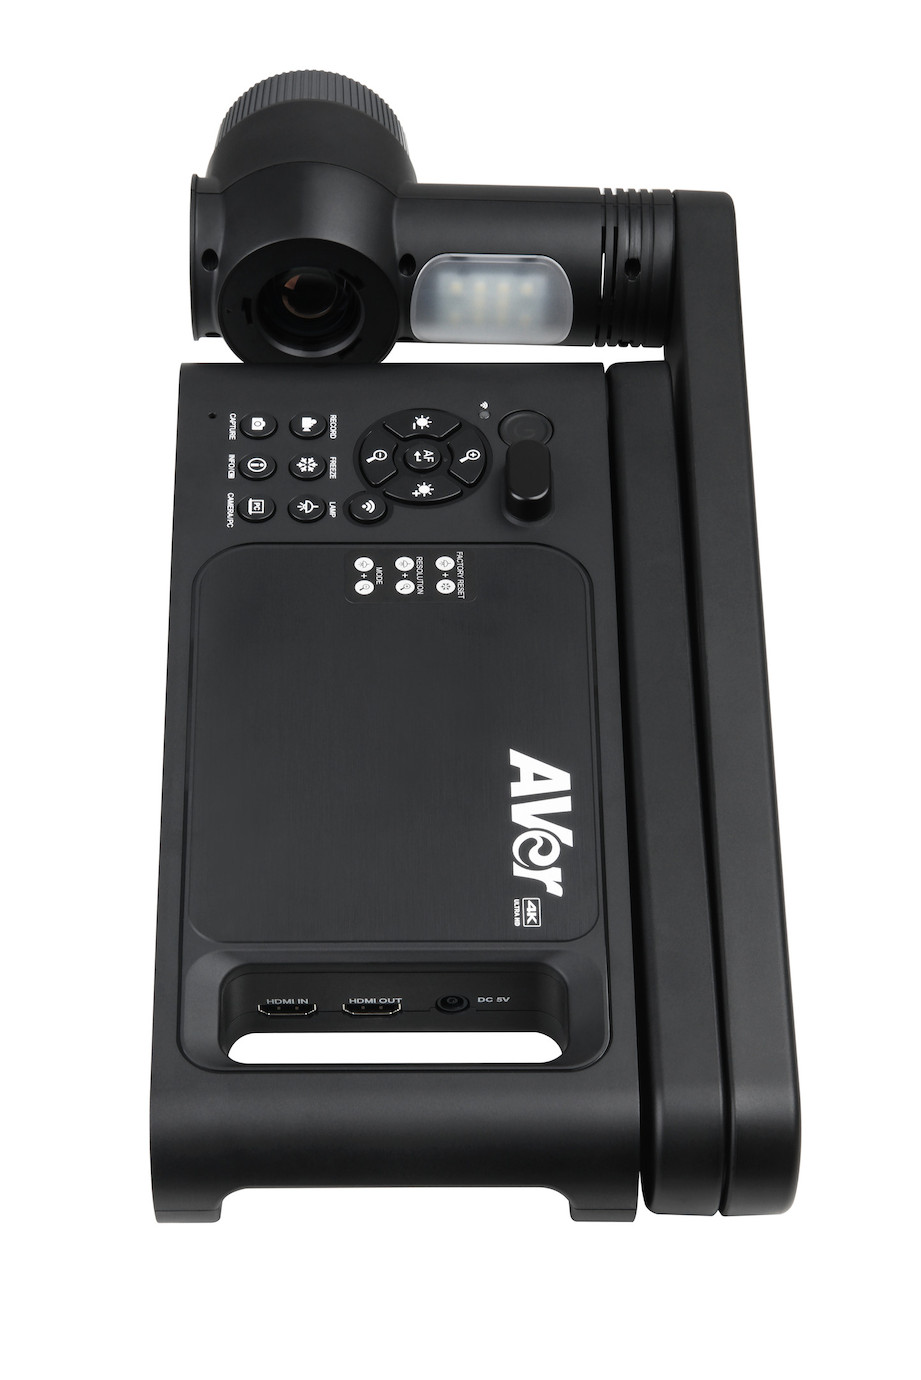 Vorschau: AVer M70W Dokumentenkamera - 4K, 13MP, 60fps, 230x Zoom - Demo